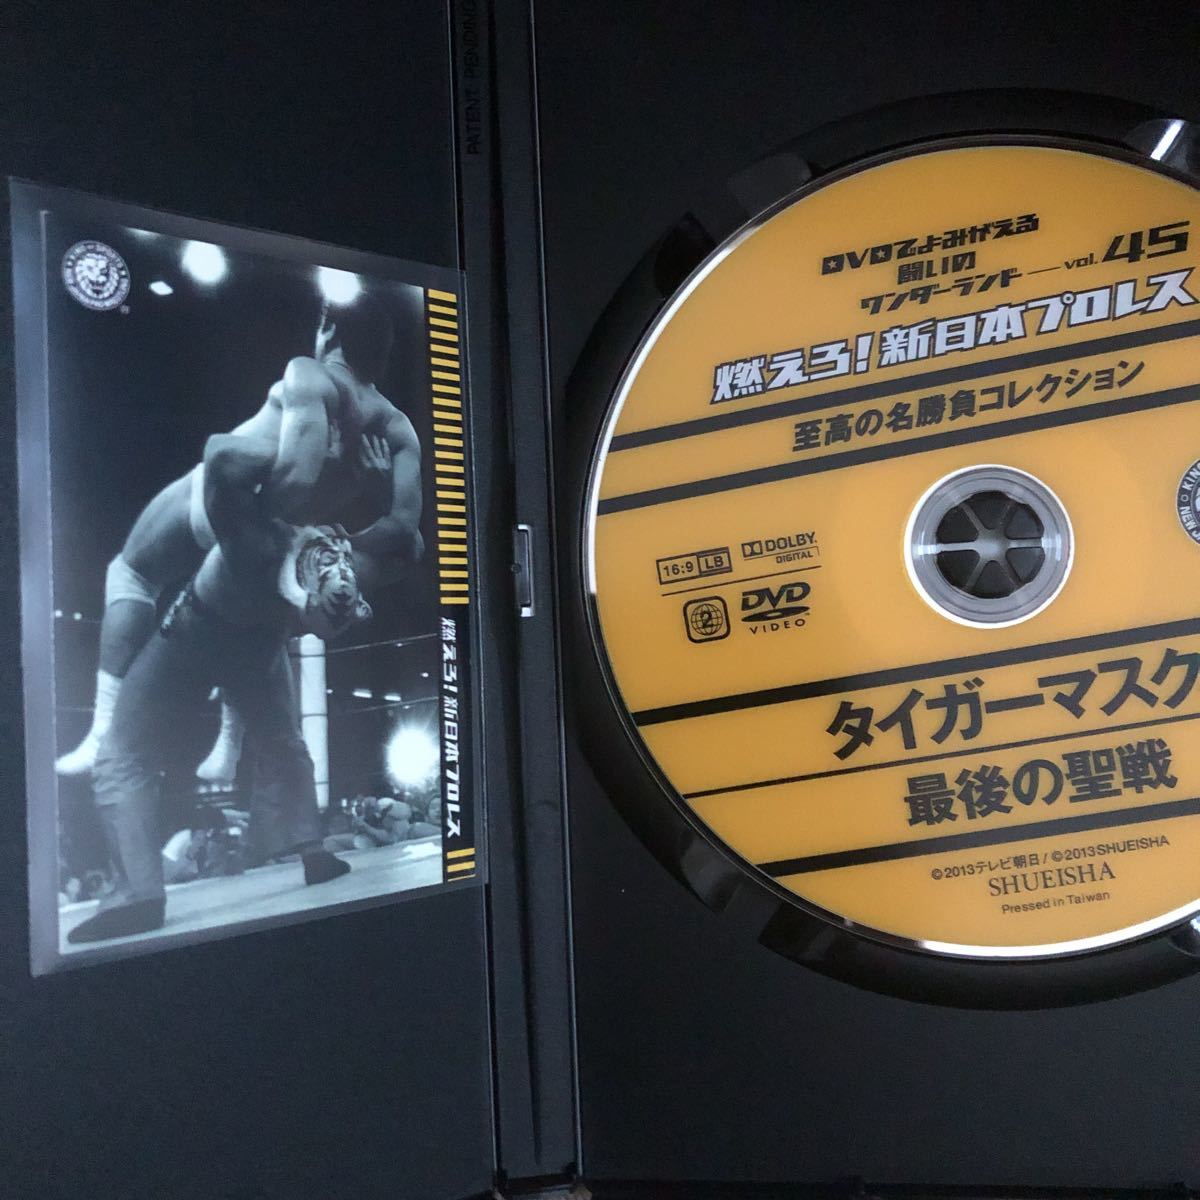  поставка со склада no- cut Tiger Mask на fishu man DVD гореть . New Japan Professional Wrestling 